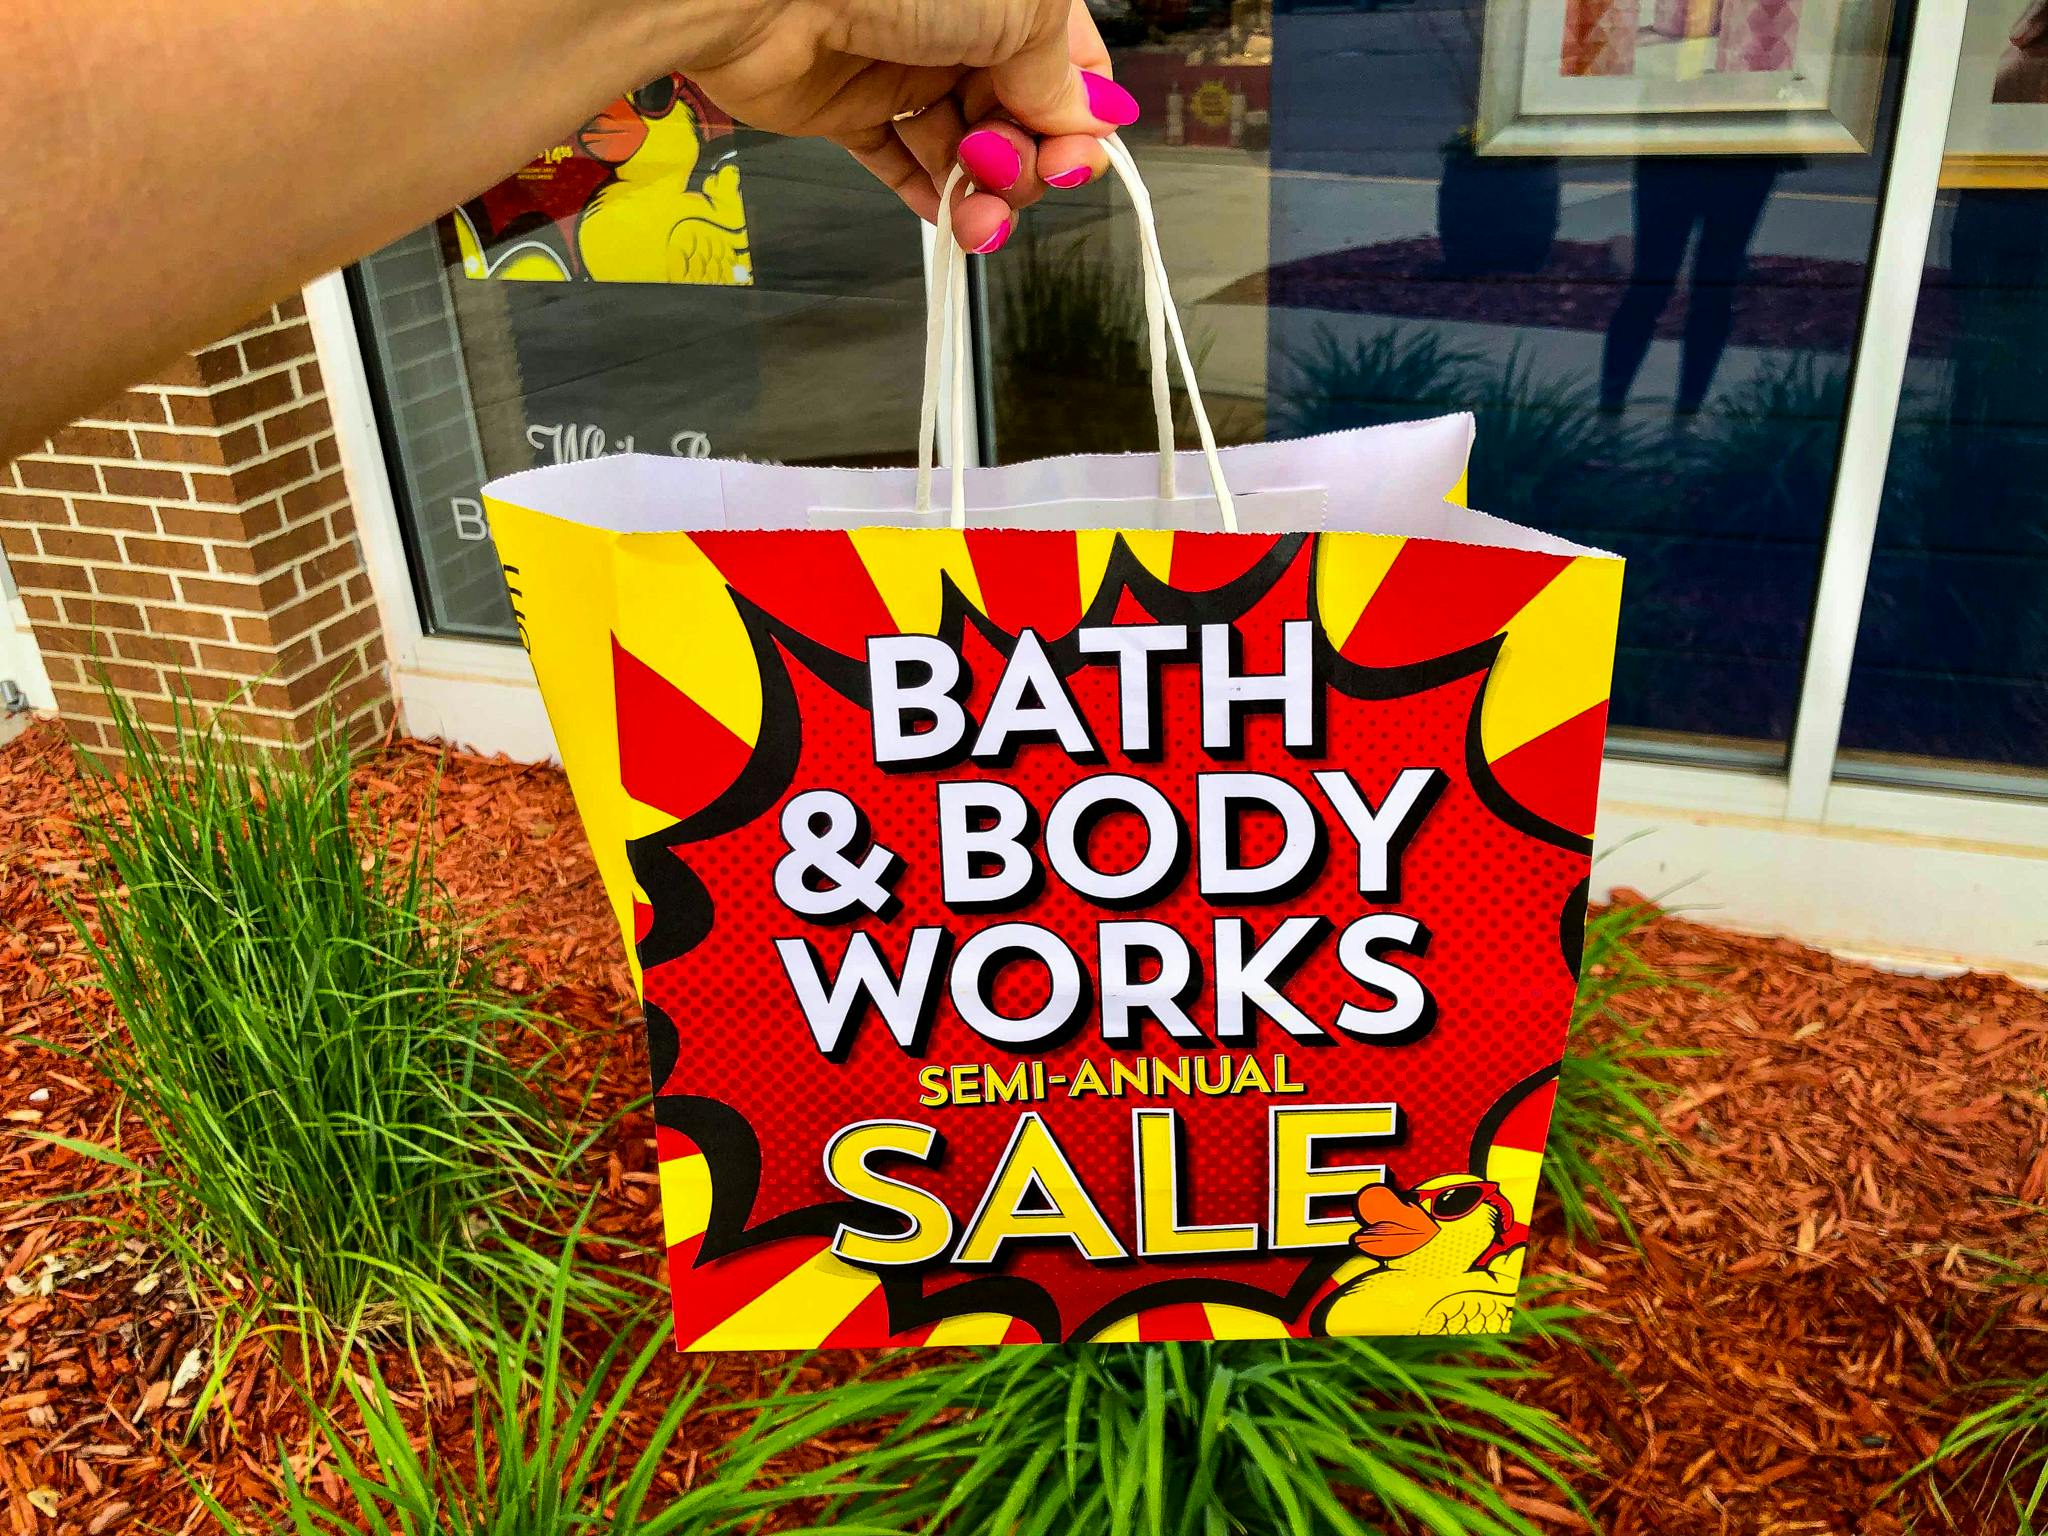 Bath & Body Works Extended Their Semi-Annual Sale – SheKnows